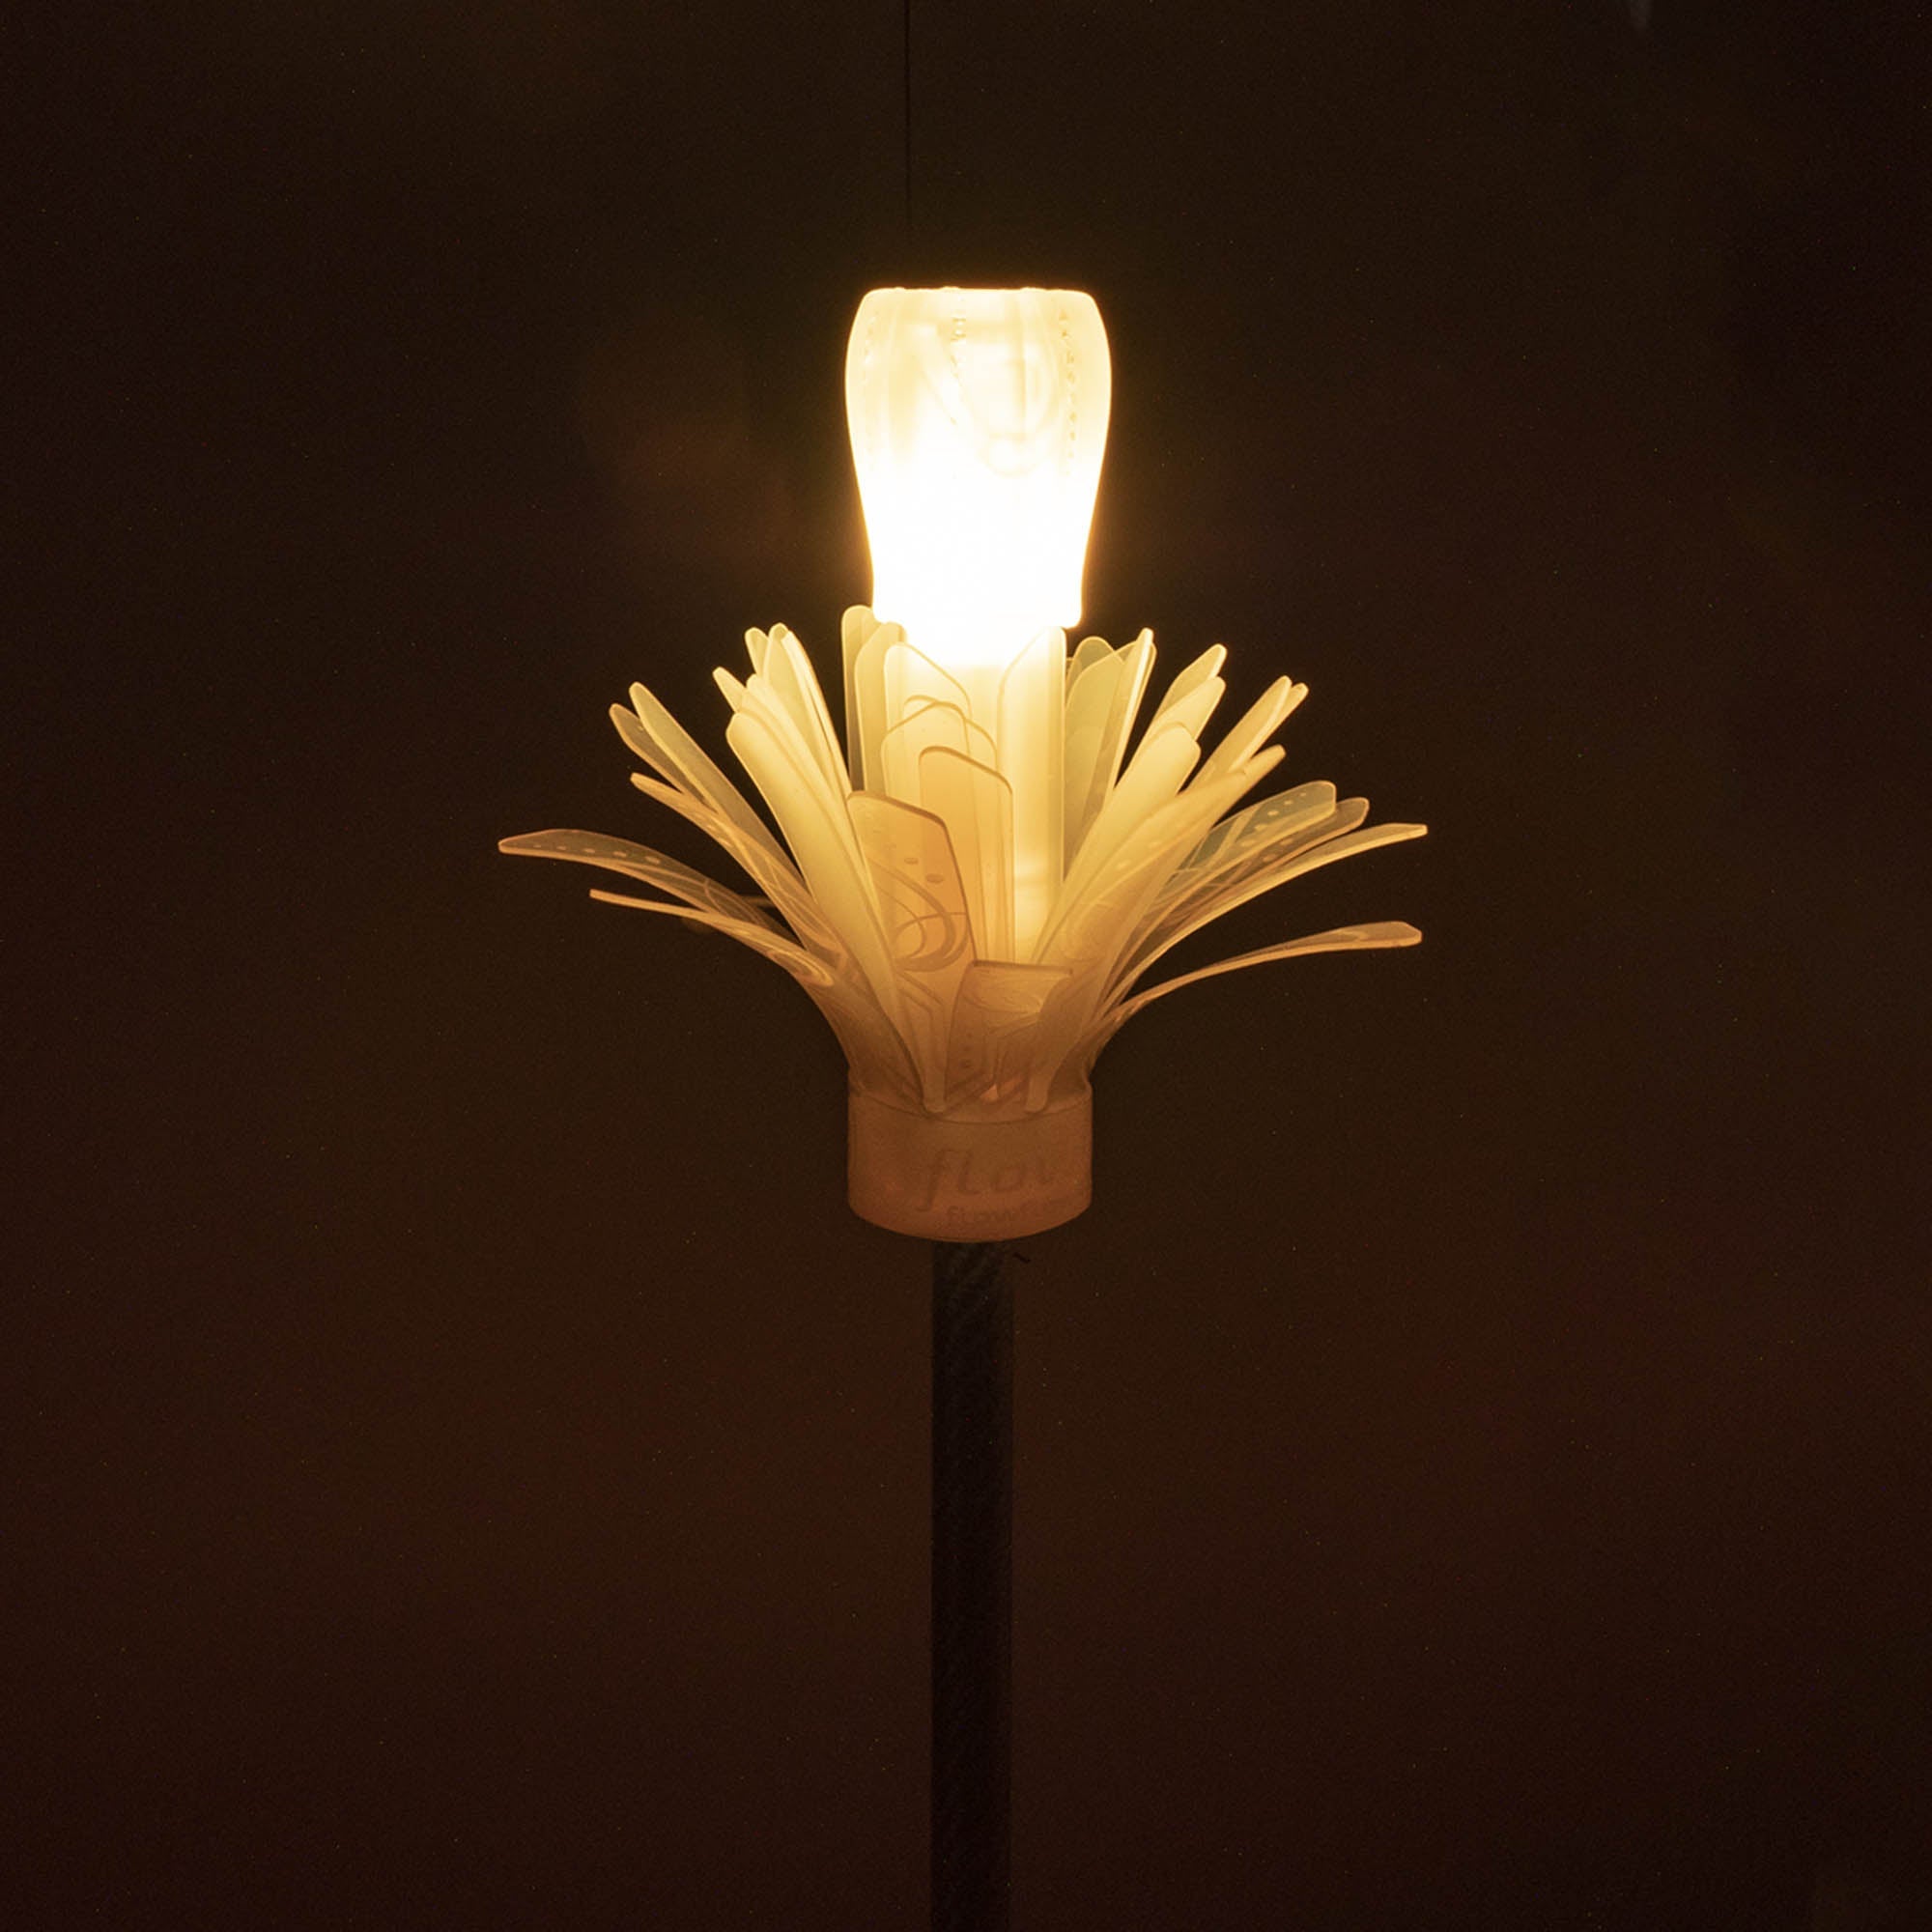 Flowtoys Composite LED Glow Flower Stick V2 glowing orange close up